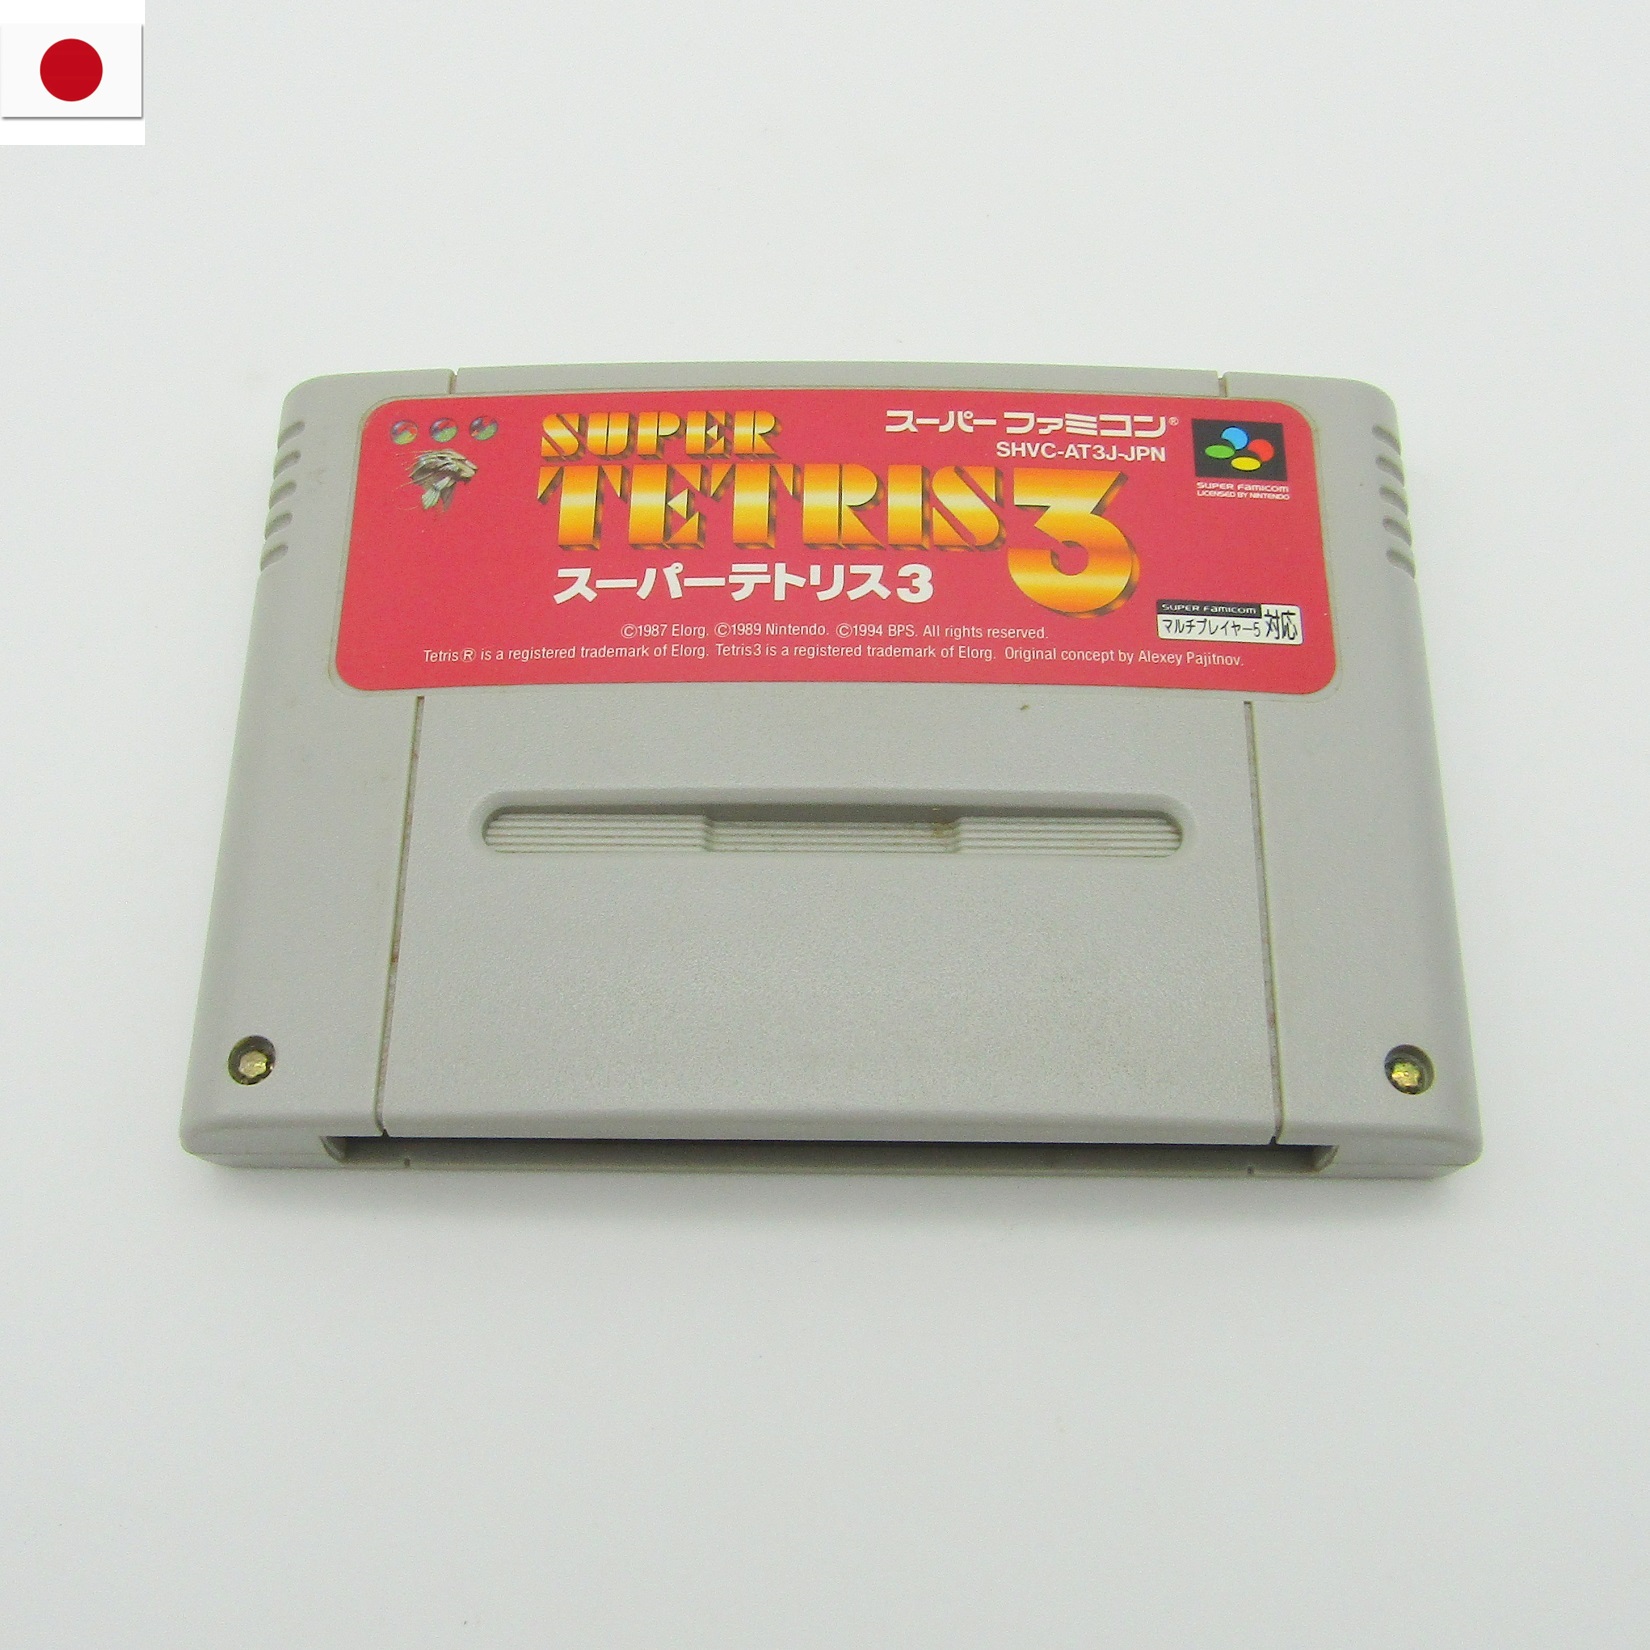 Jeu vidéo Nintendo. Console Super Famicom. Super Tetris 3